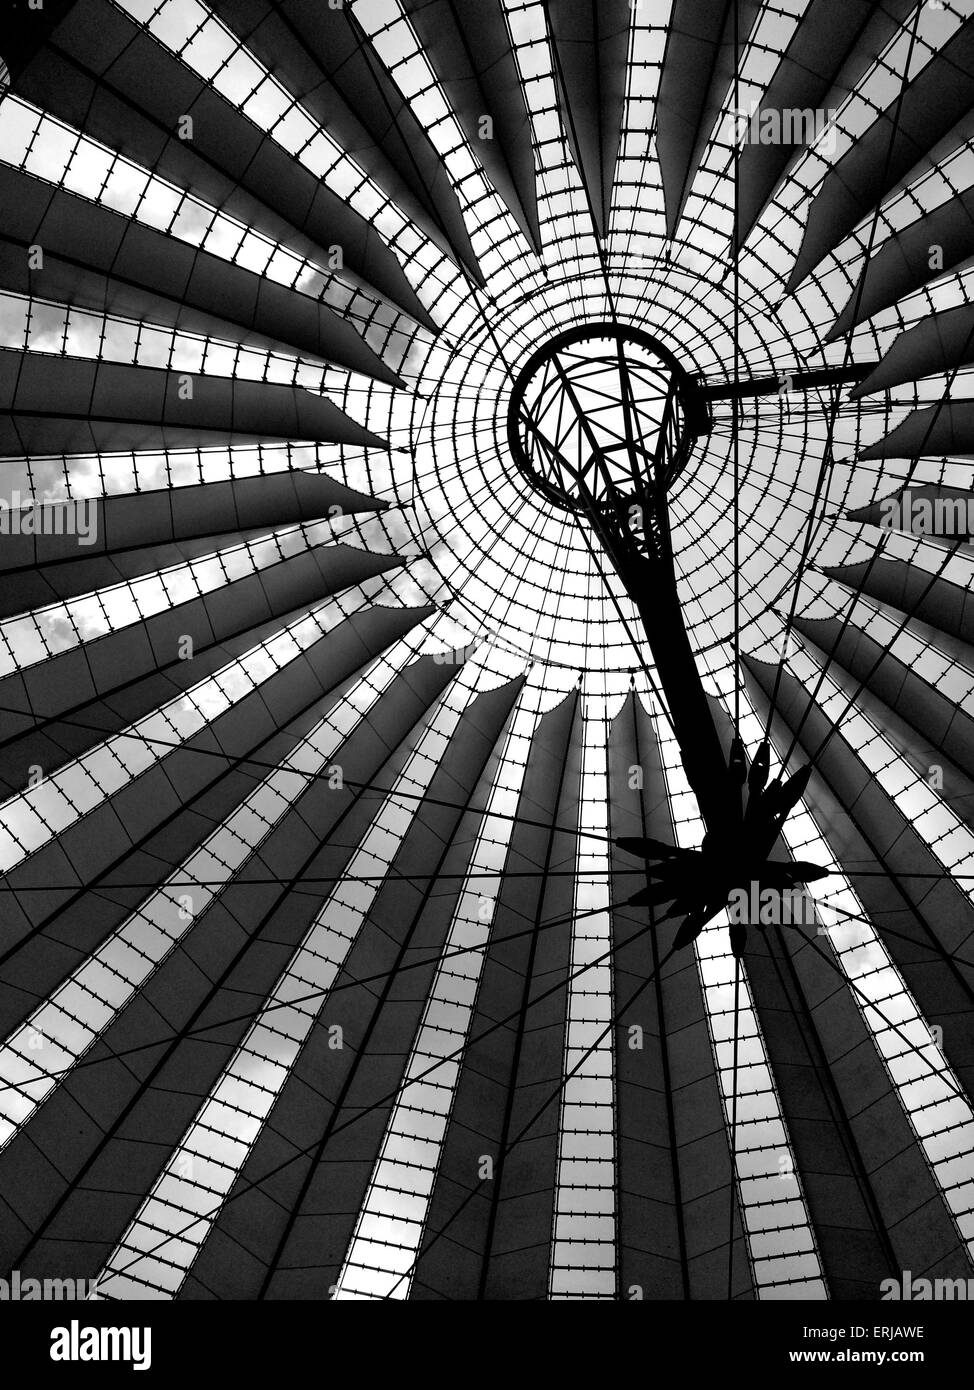 Berlin architecture and design Stock Photo